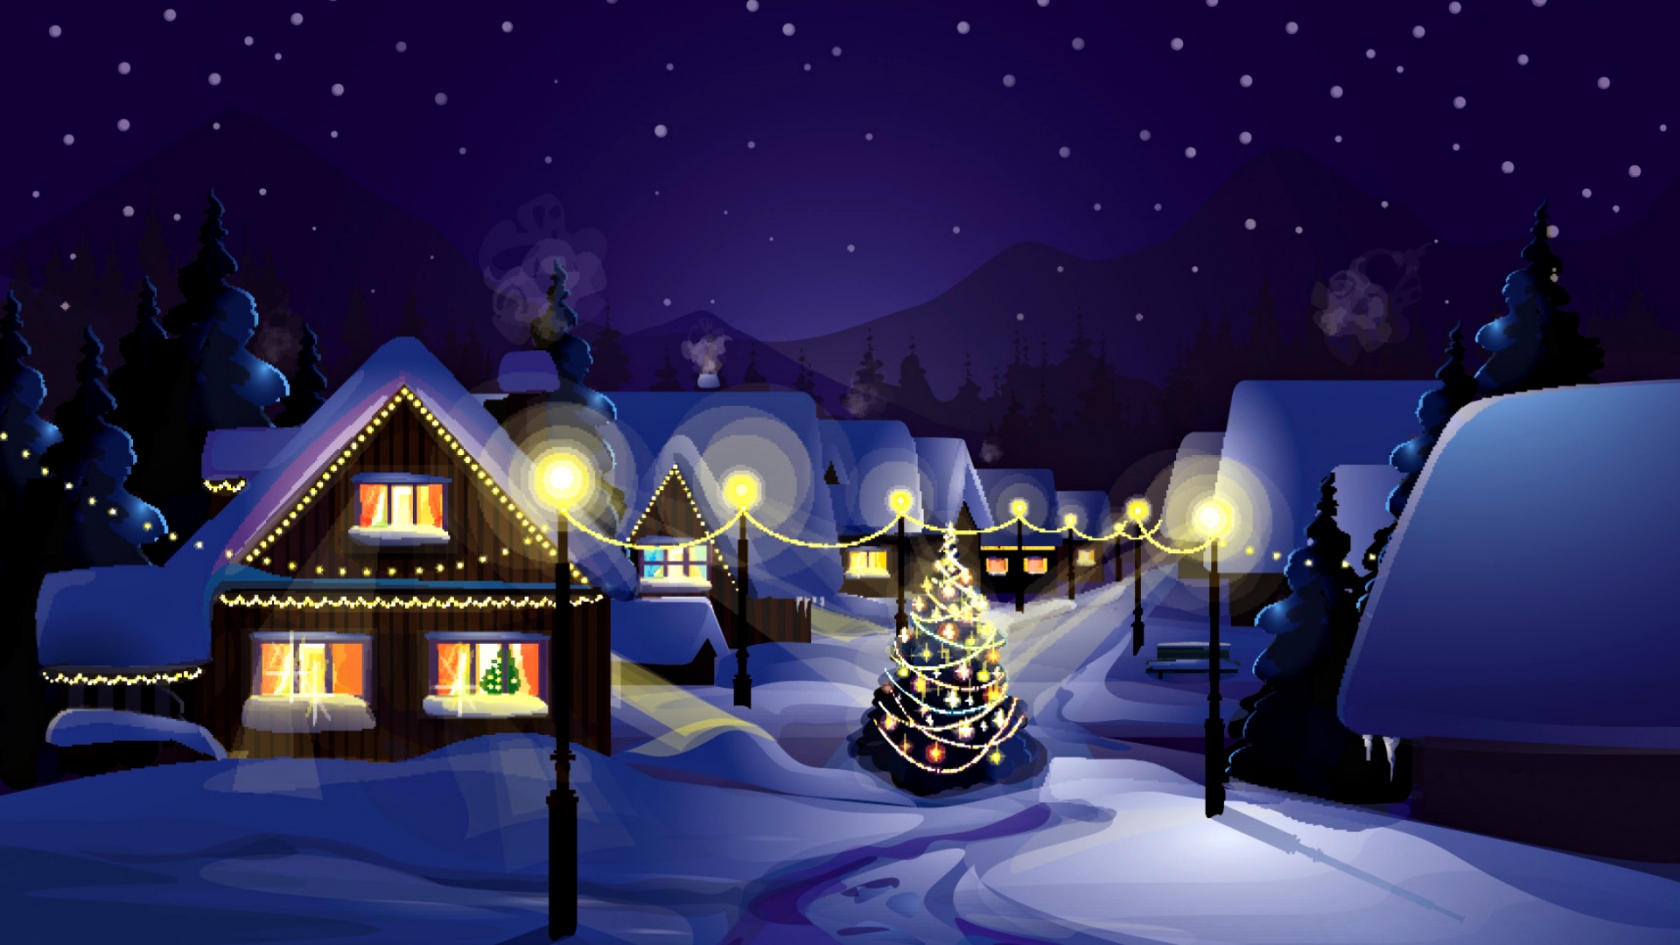 Christmas Village for 1680 x 945 HDTV resolution